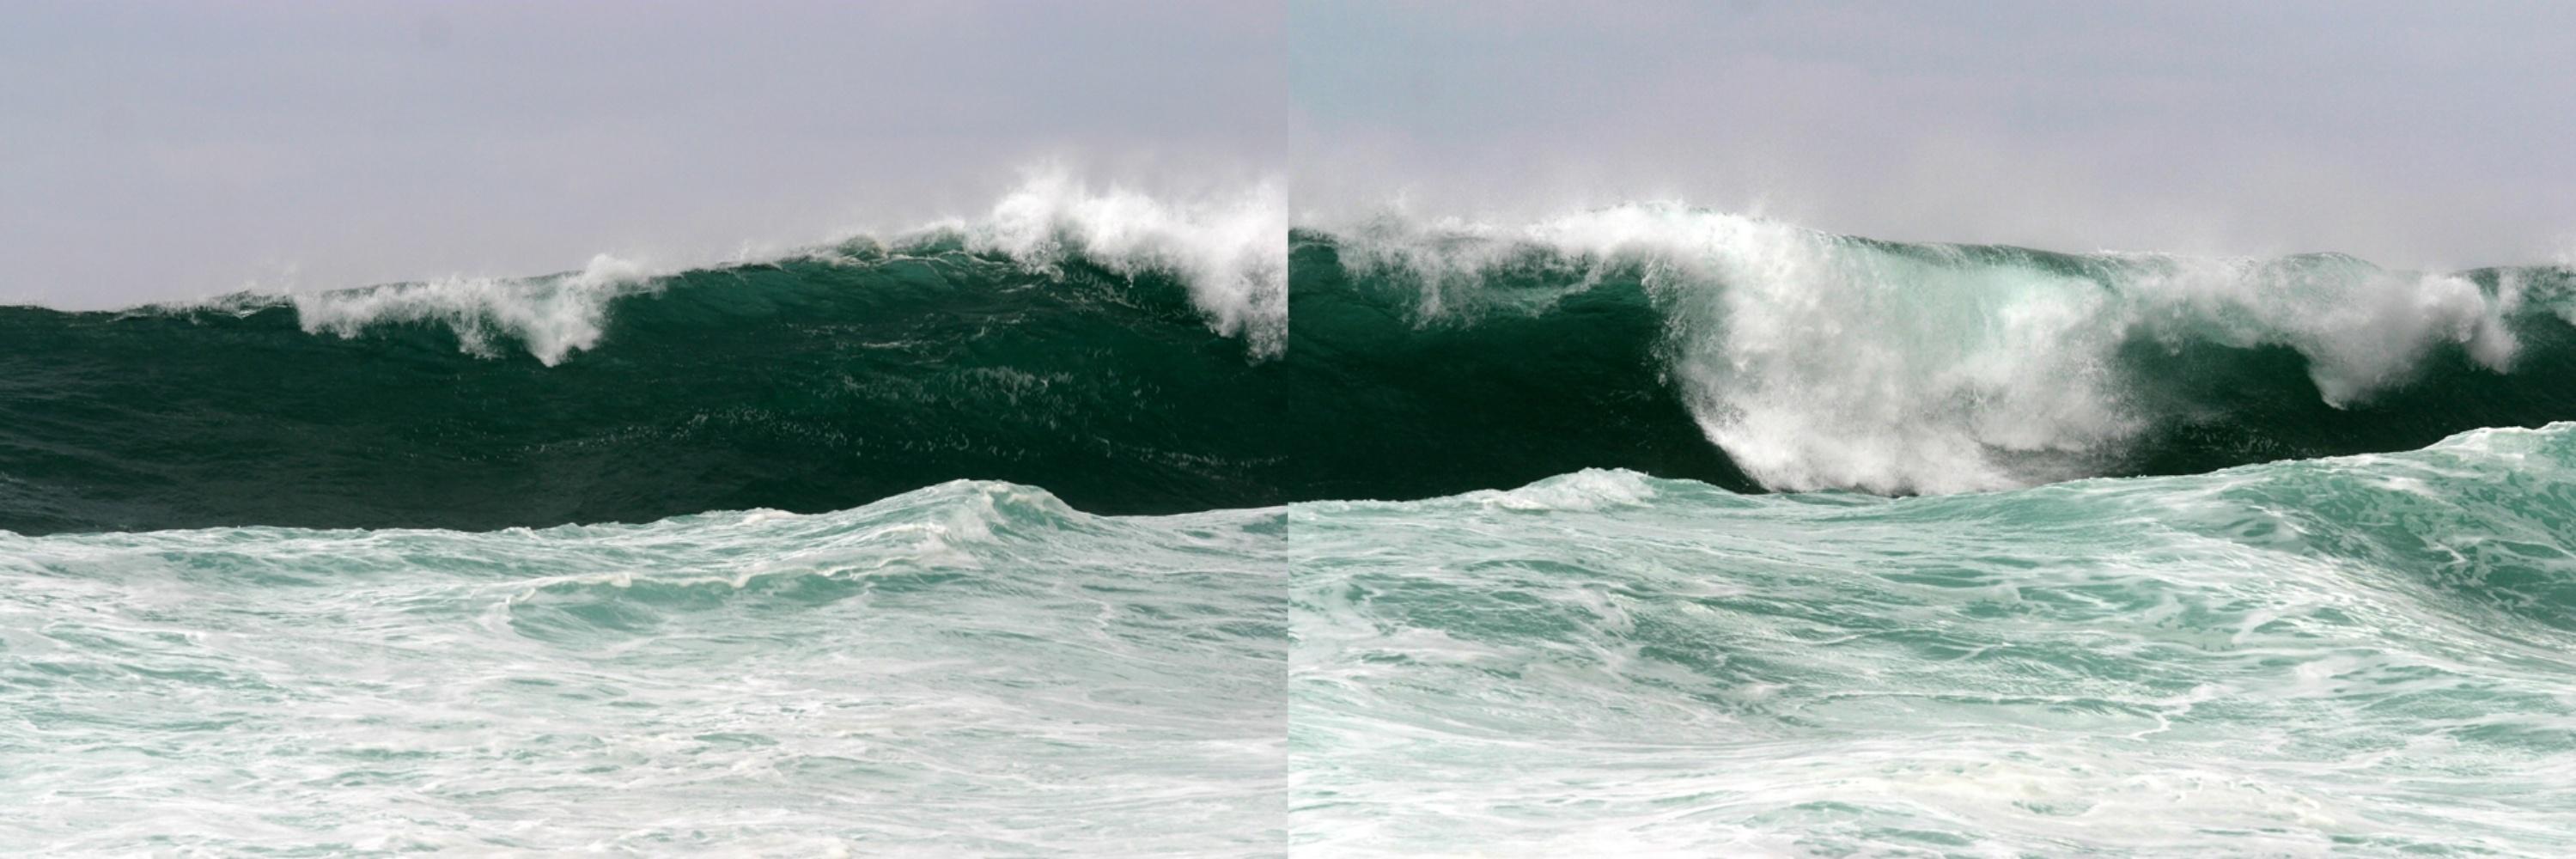 Syoin KAJII (*1976, Japan)
NAMI_015-016, 2004
Lambda Print with Diasec Face
100 x 300 cm (39 3/8 x 118 1/8 in.)
Edition of 6; Ed. no. 3/6

About NAMI: 
NAMI is a series of photos of waves around the shores of Sado Island in Japan. The photographer,